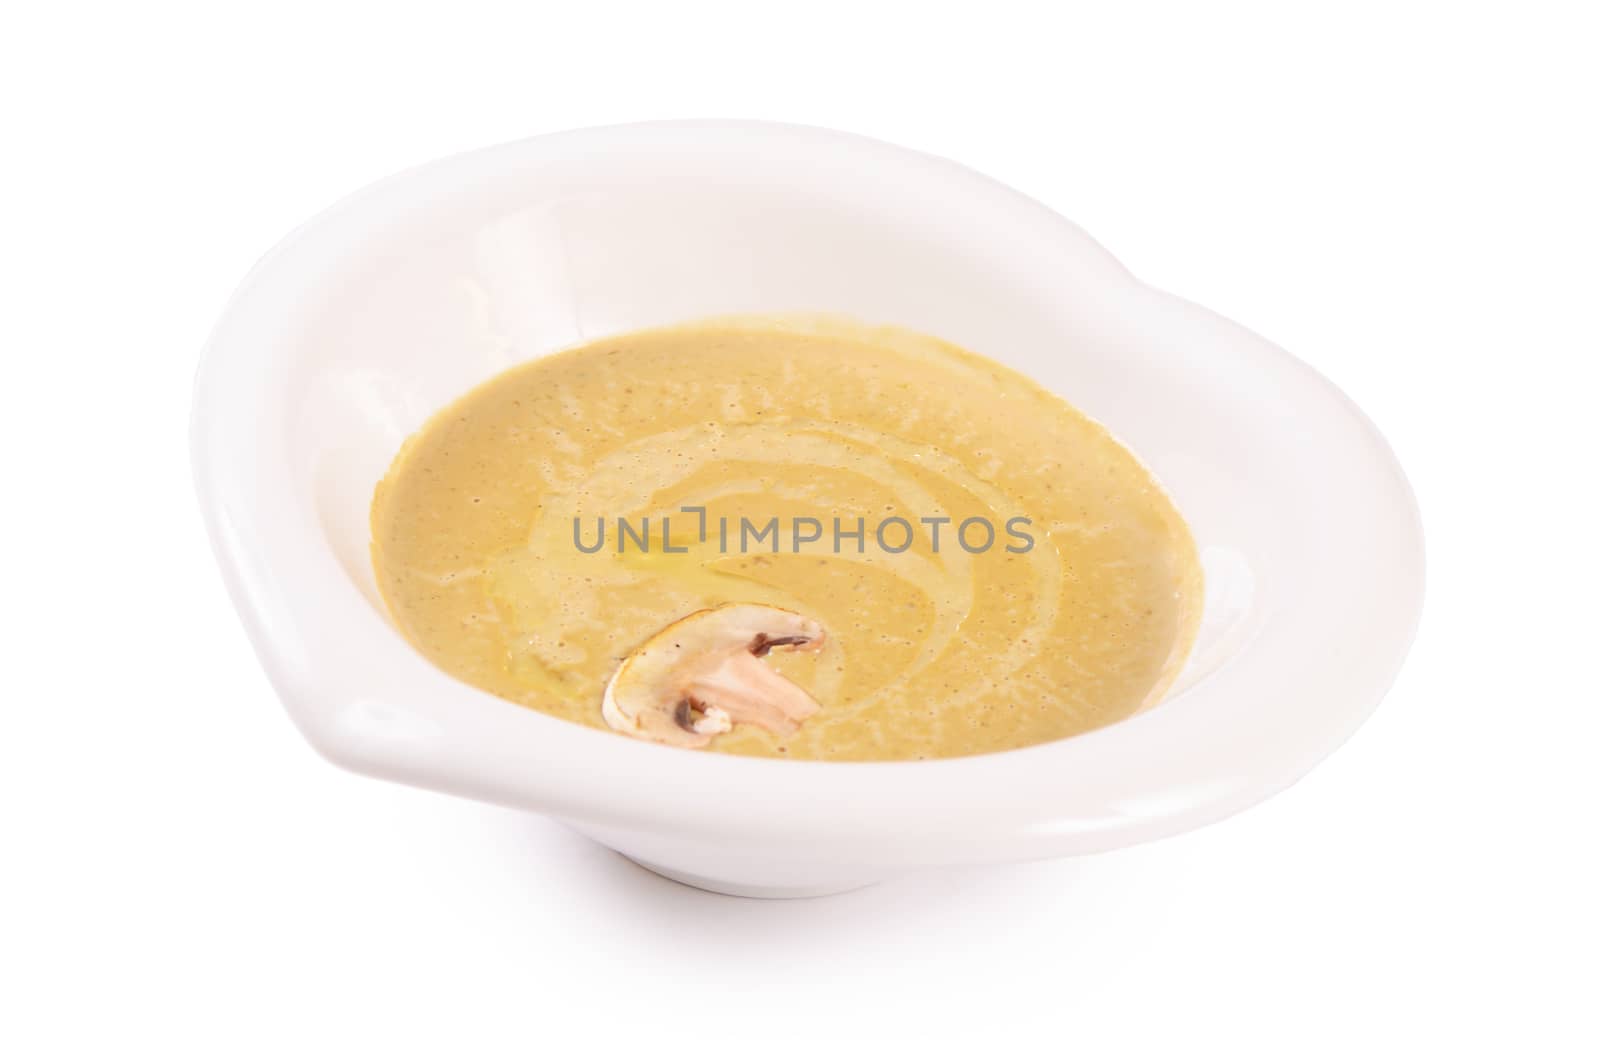 The mushroom cream soup with champignon close-up